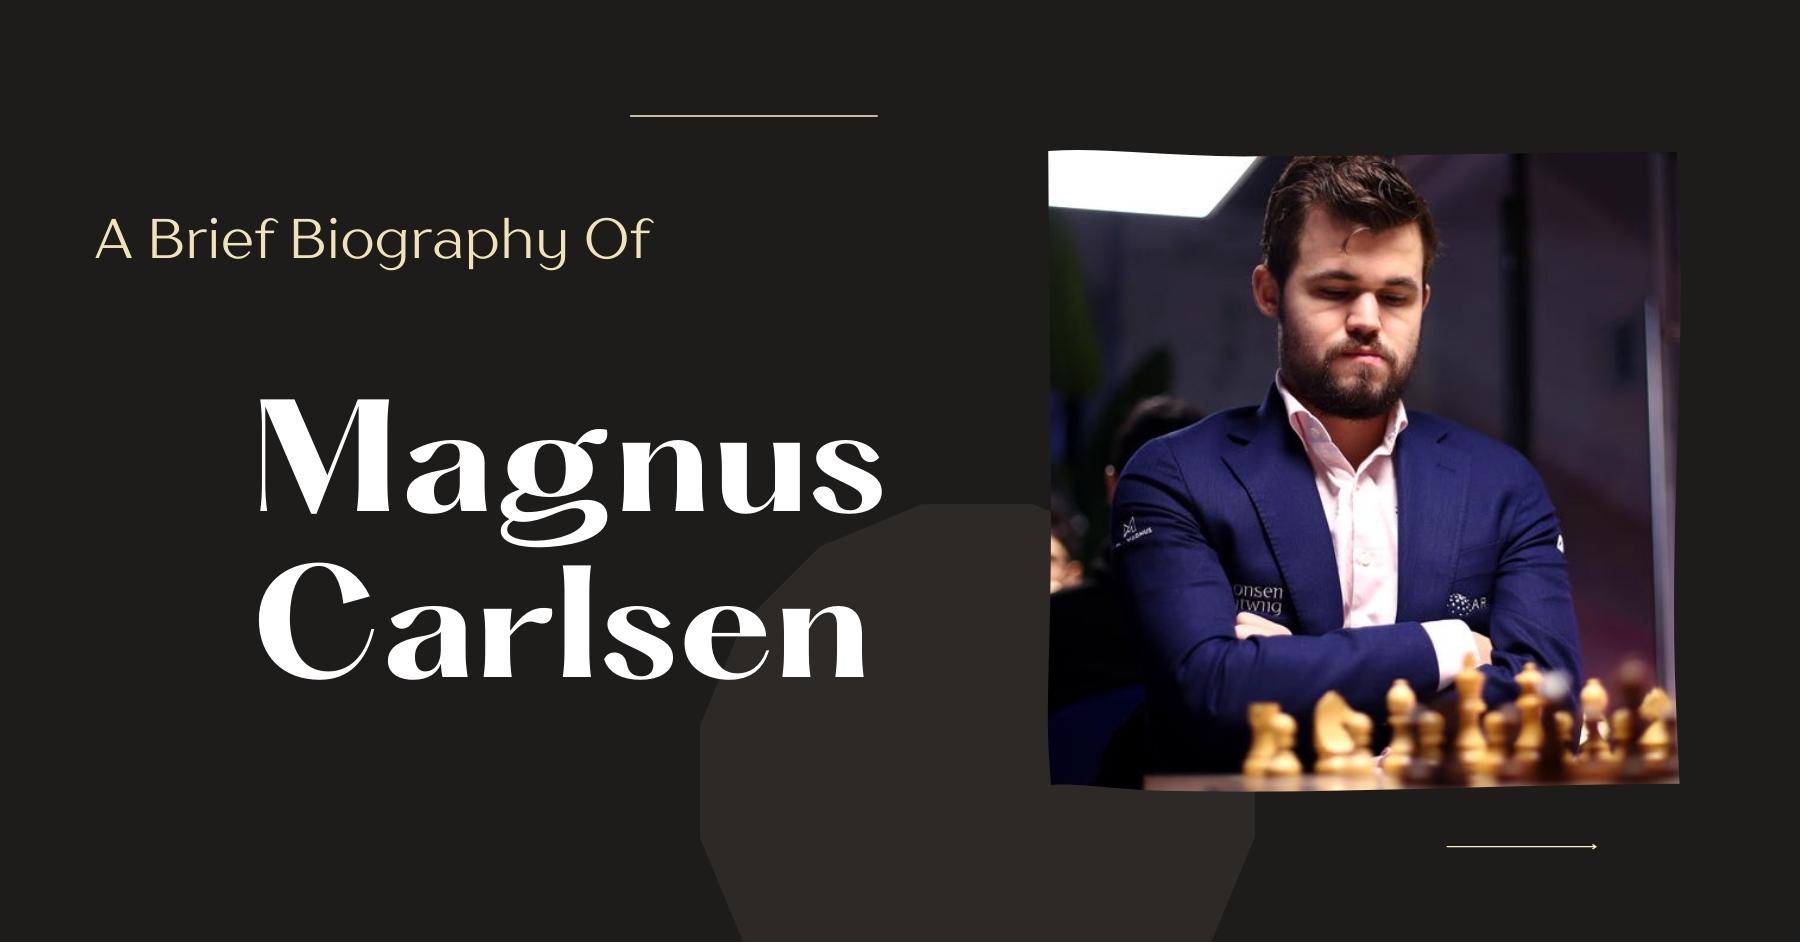 A Brief Biography Of Magnus Carlsen